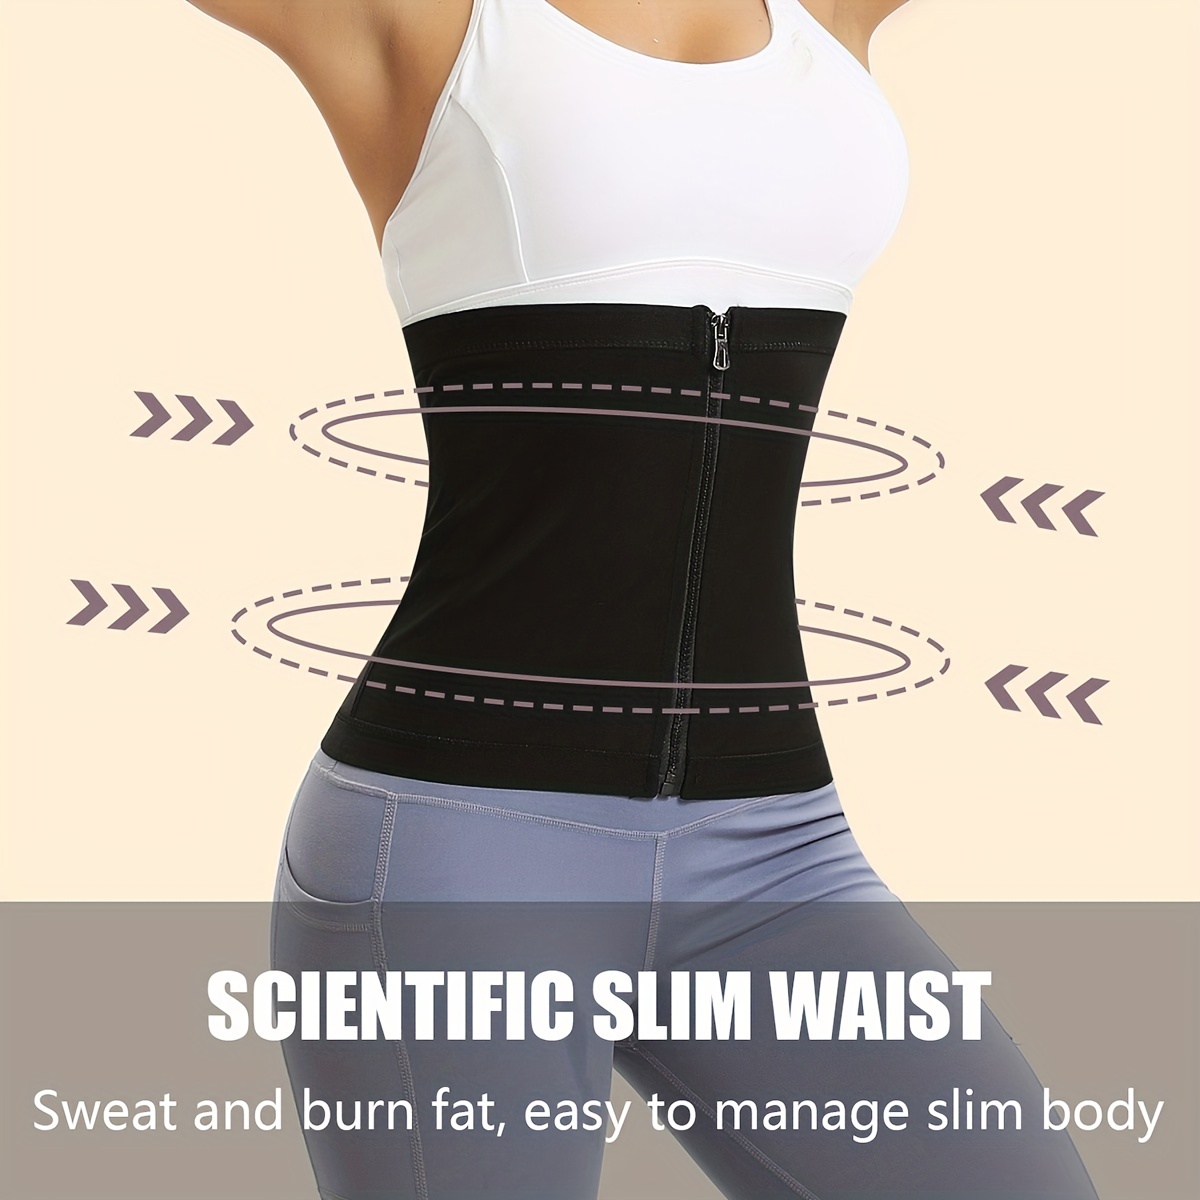 Body shaping : Just Slim Belt sauna slimming girdle